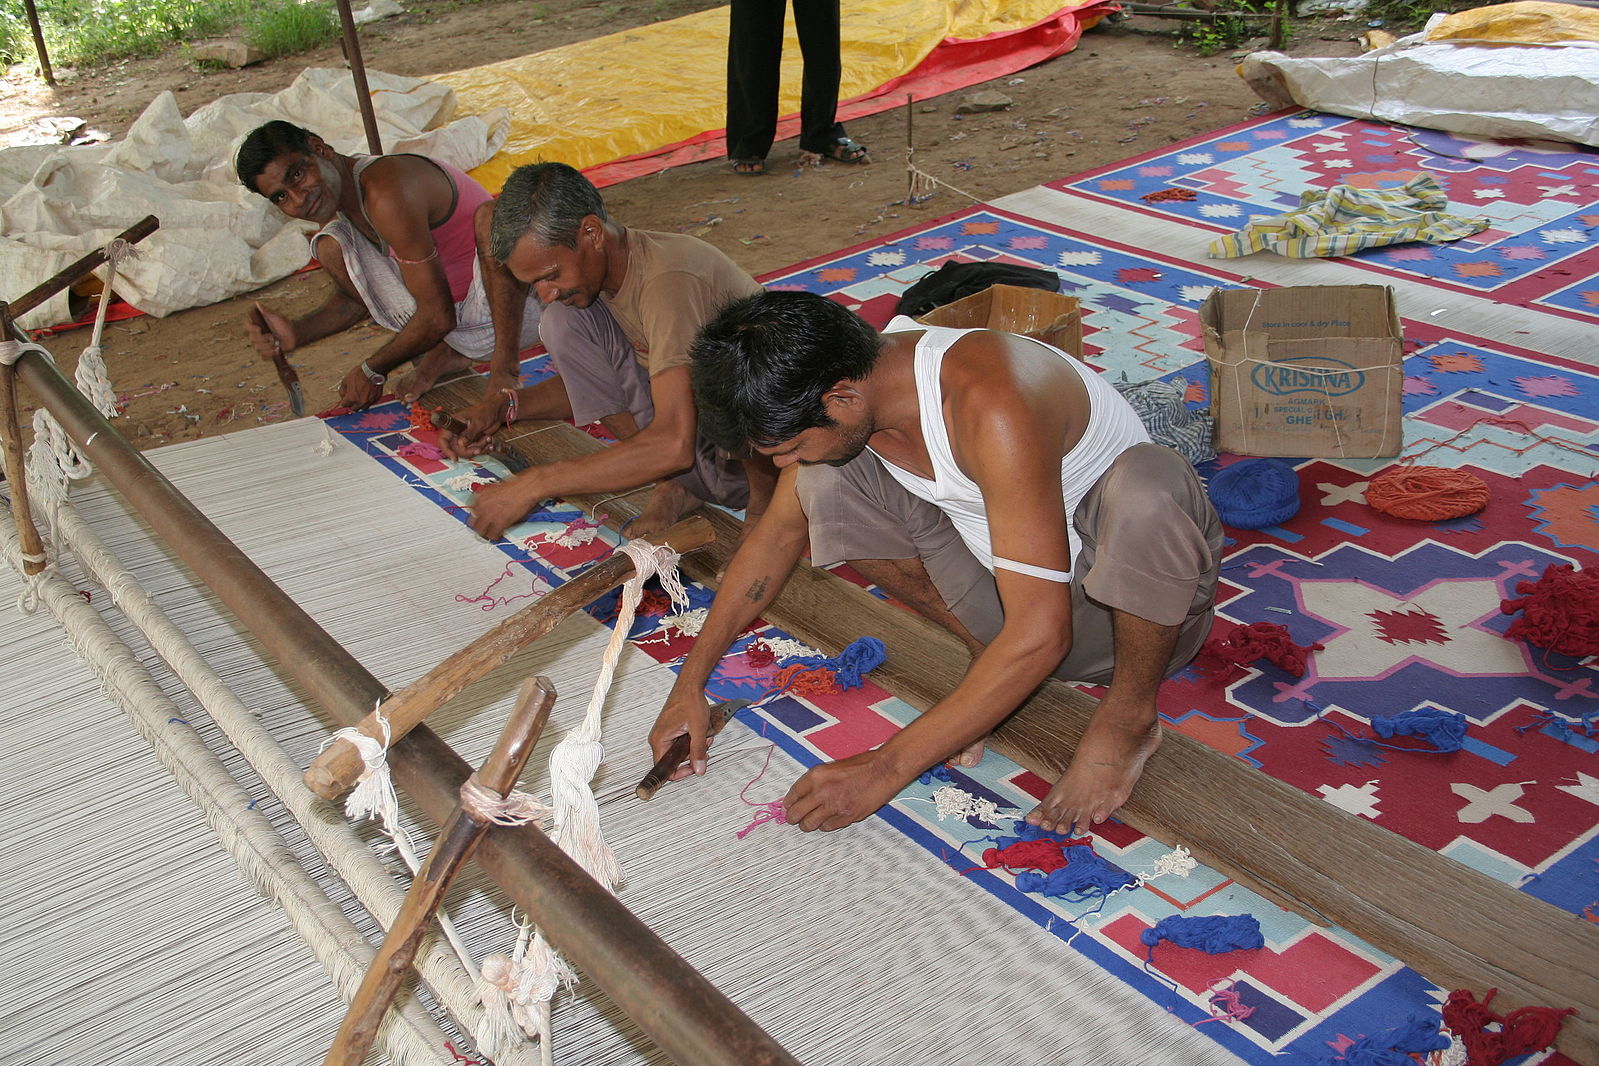 Carpet weavers, near Jaipur, Rajasthan, India.